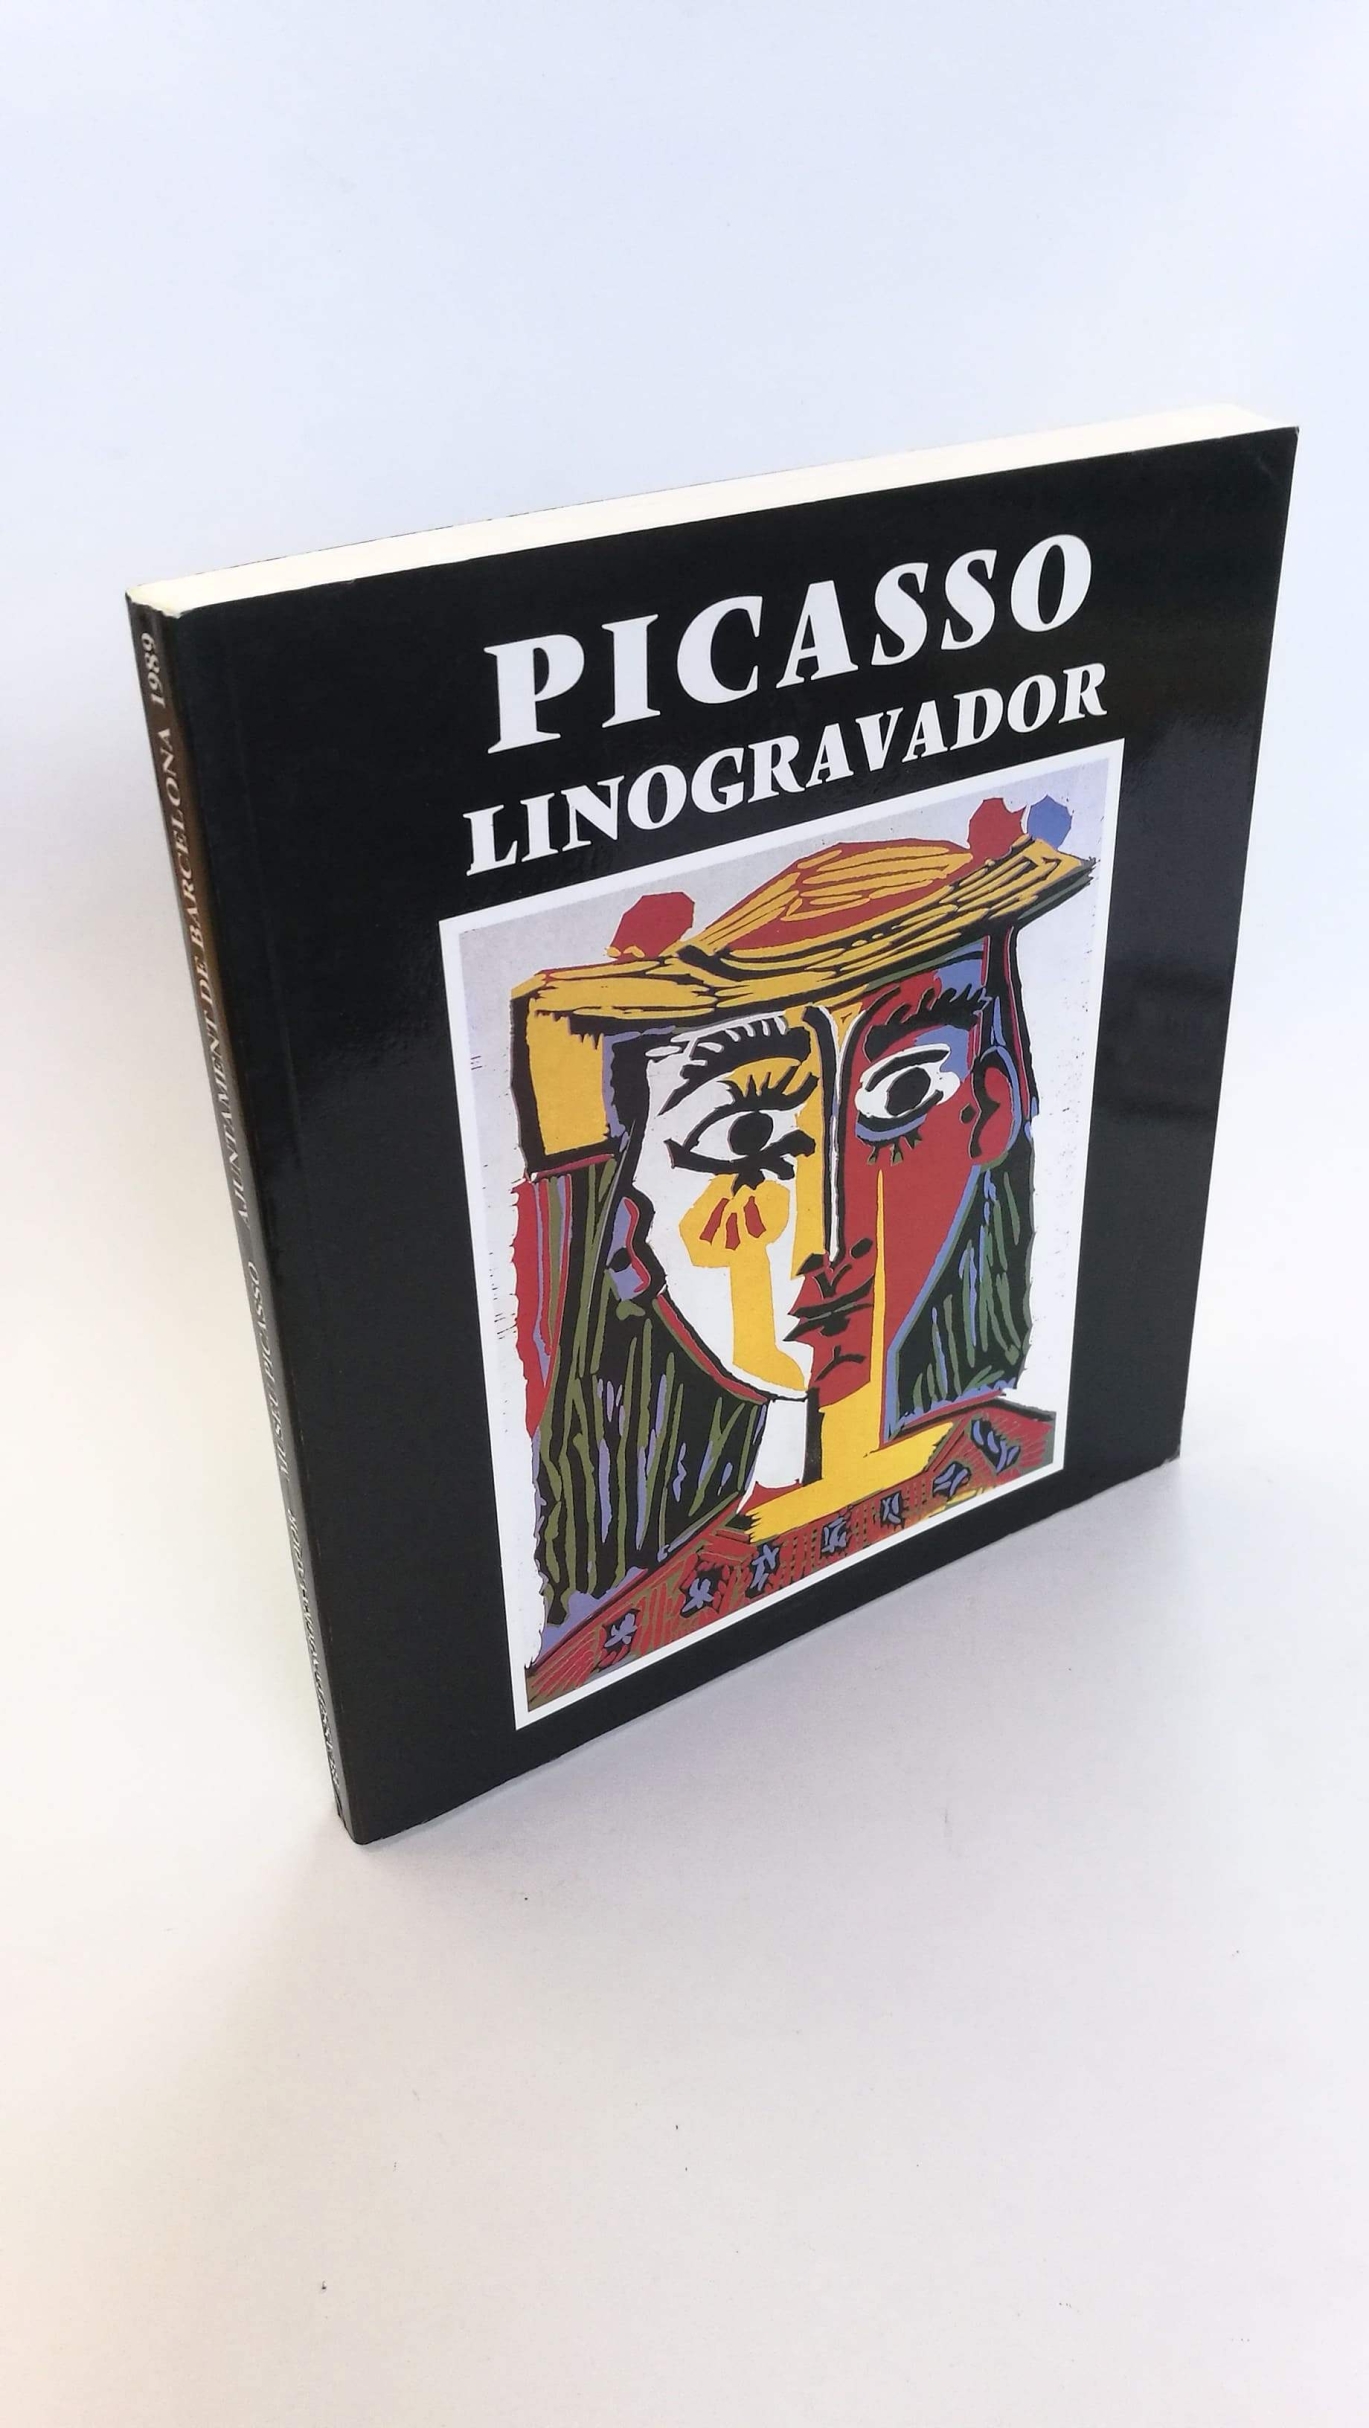 Musee Picasso: Picasso linogravador Museo Picasso Barcelona 1989